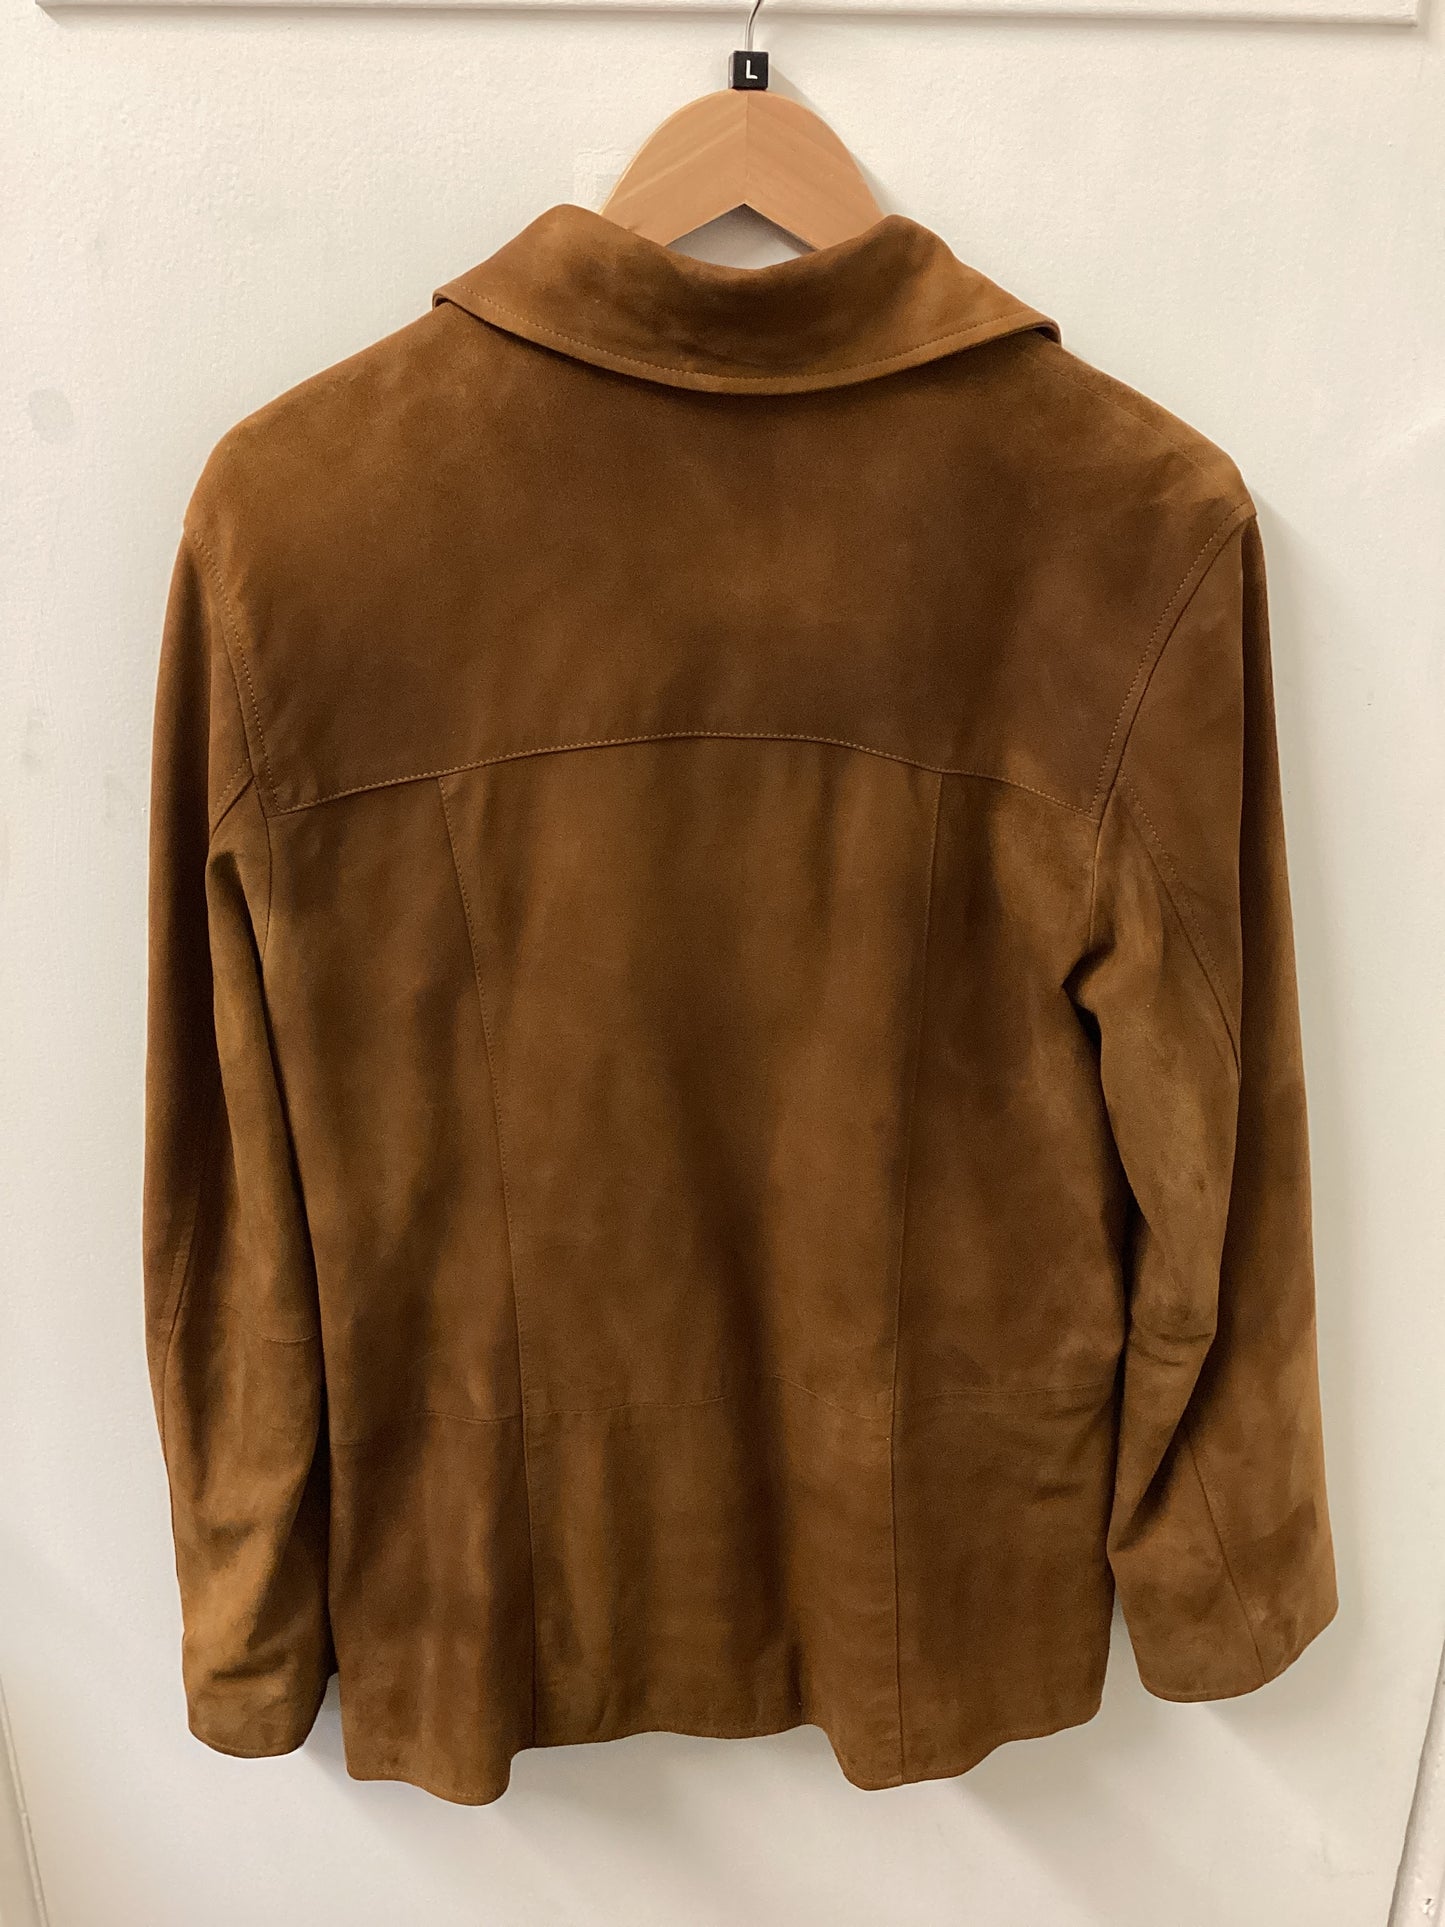 Vera Pelle Men’s Brown Leather Jacket Size 46